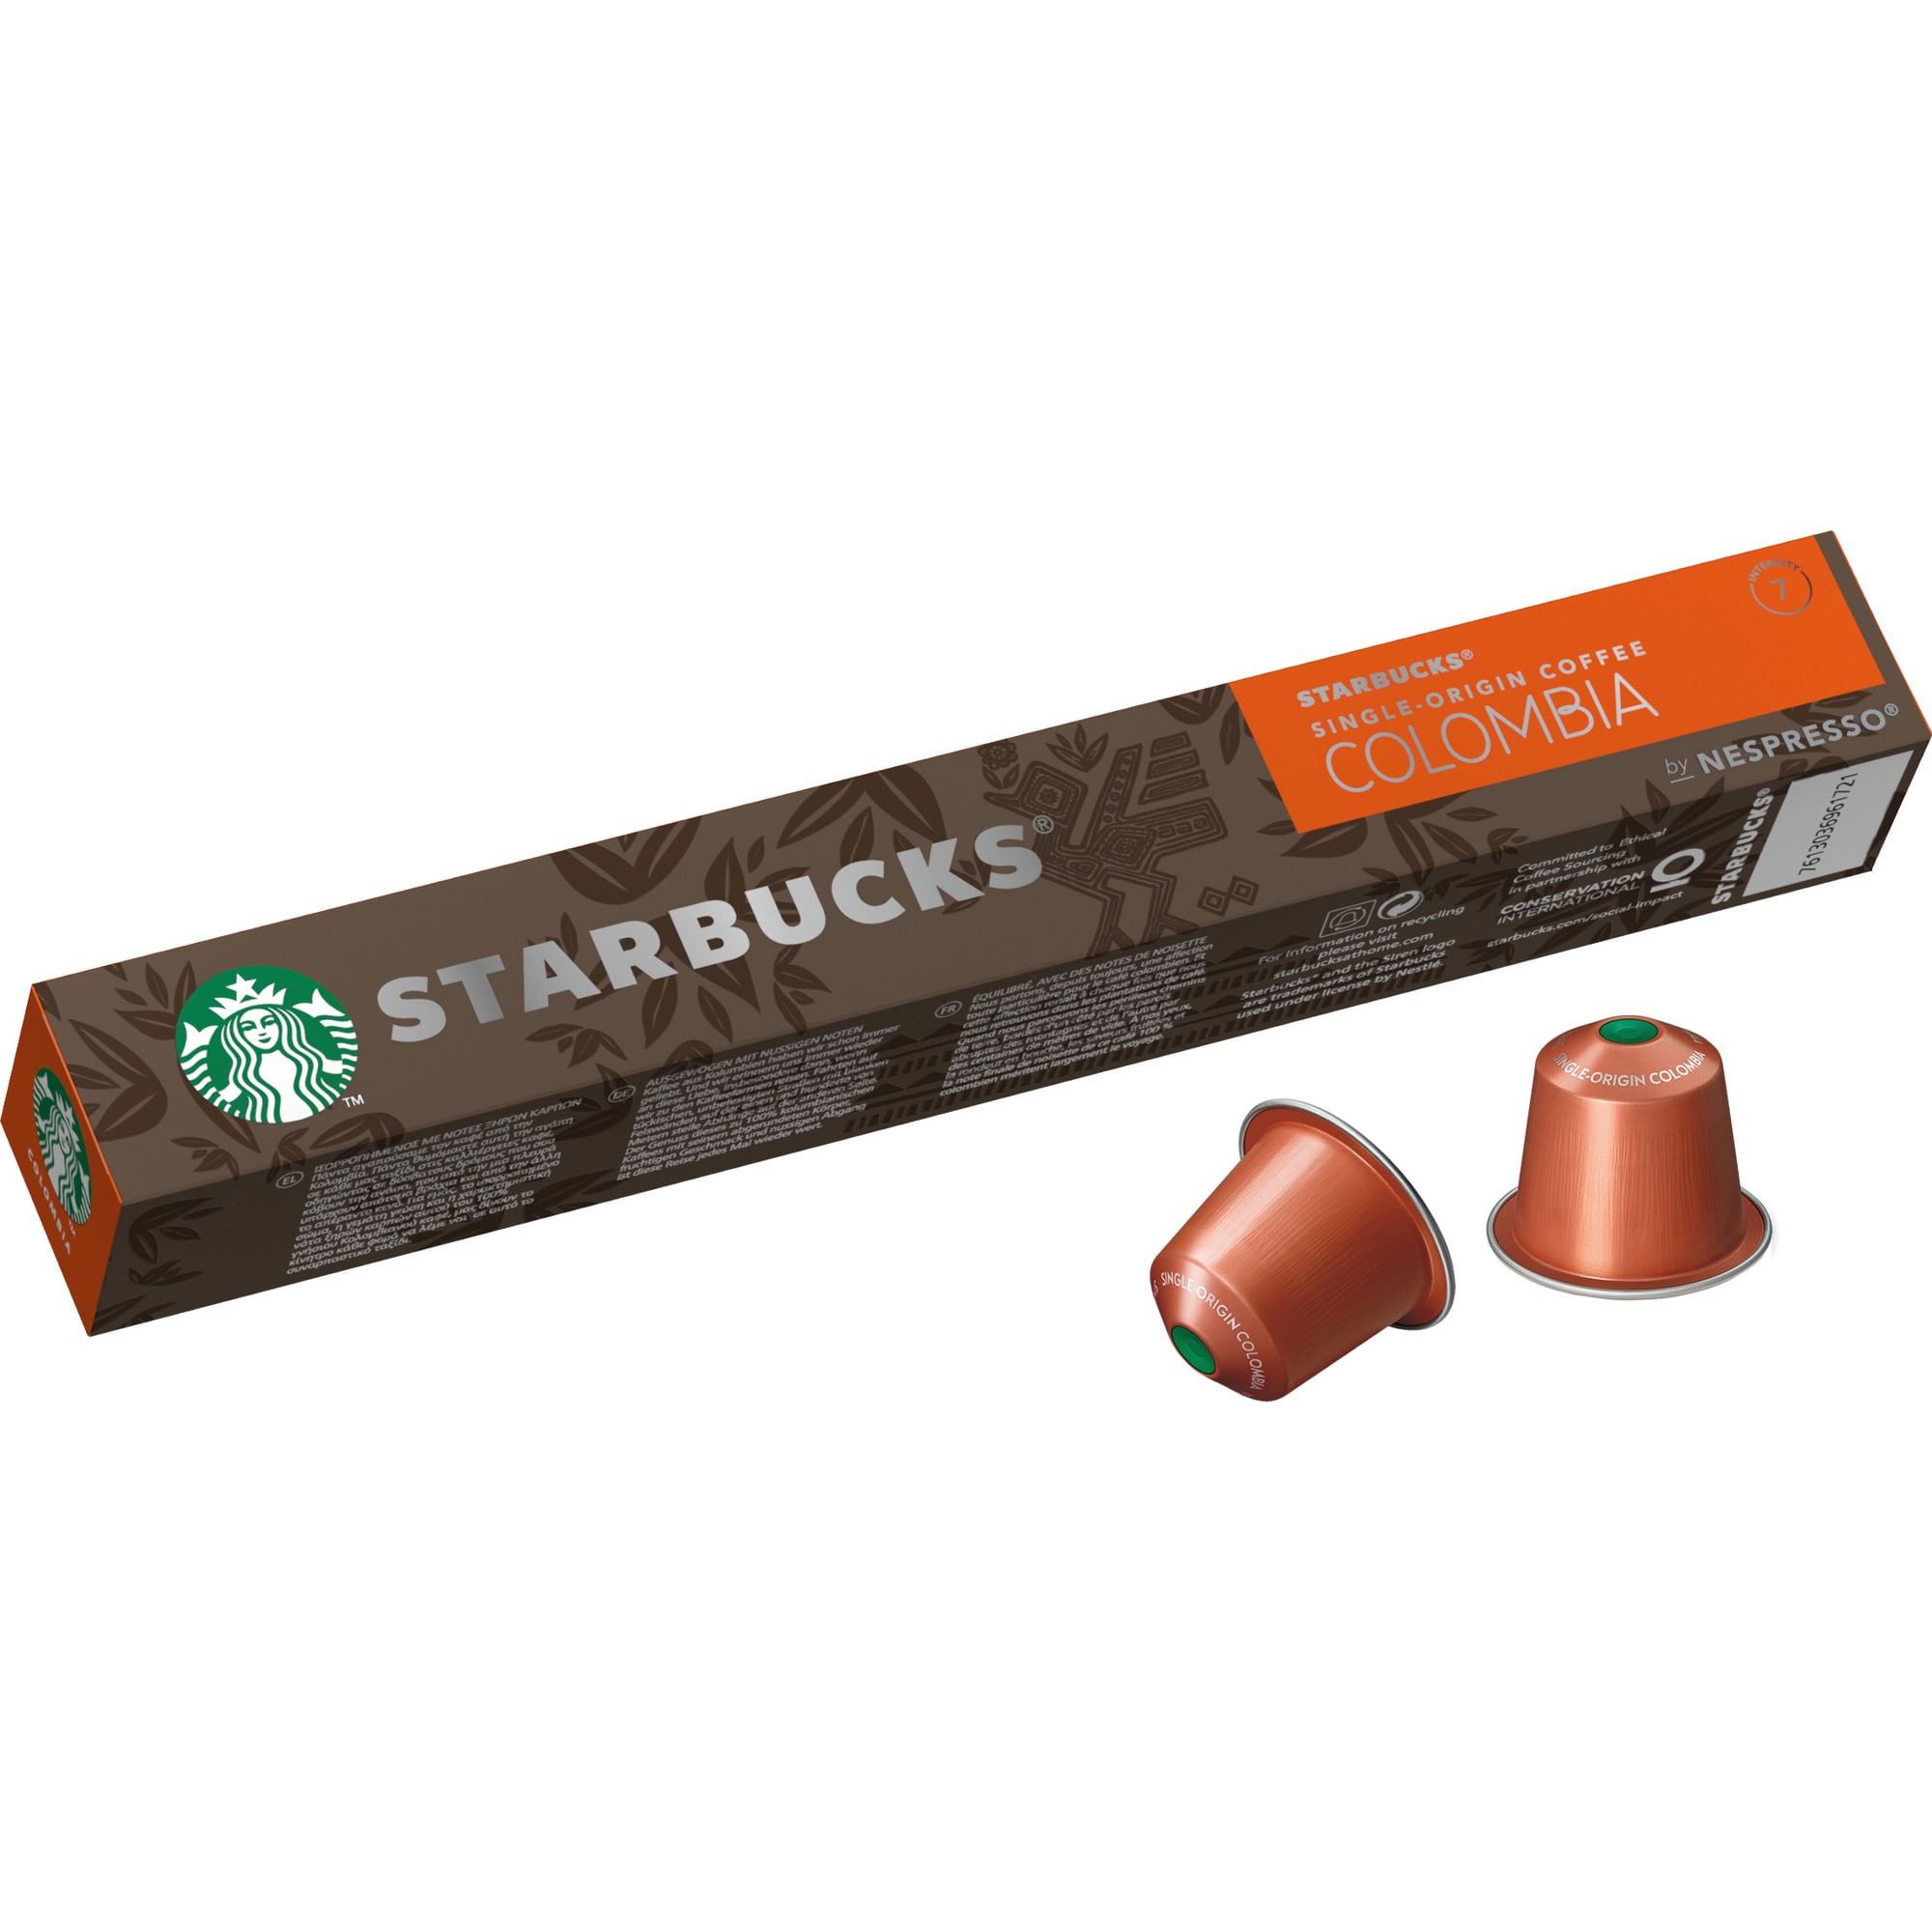 Starbucks by Nespresso Single-Origin Colombia kapsler ST12429169 - Elkjøp